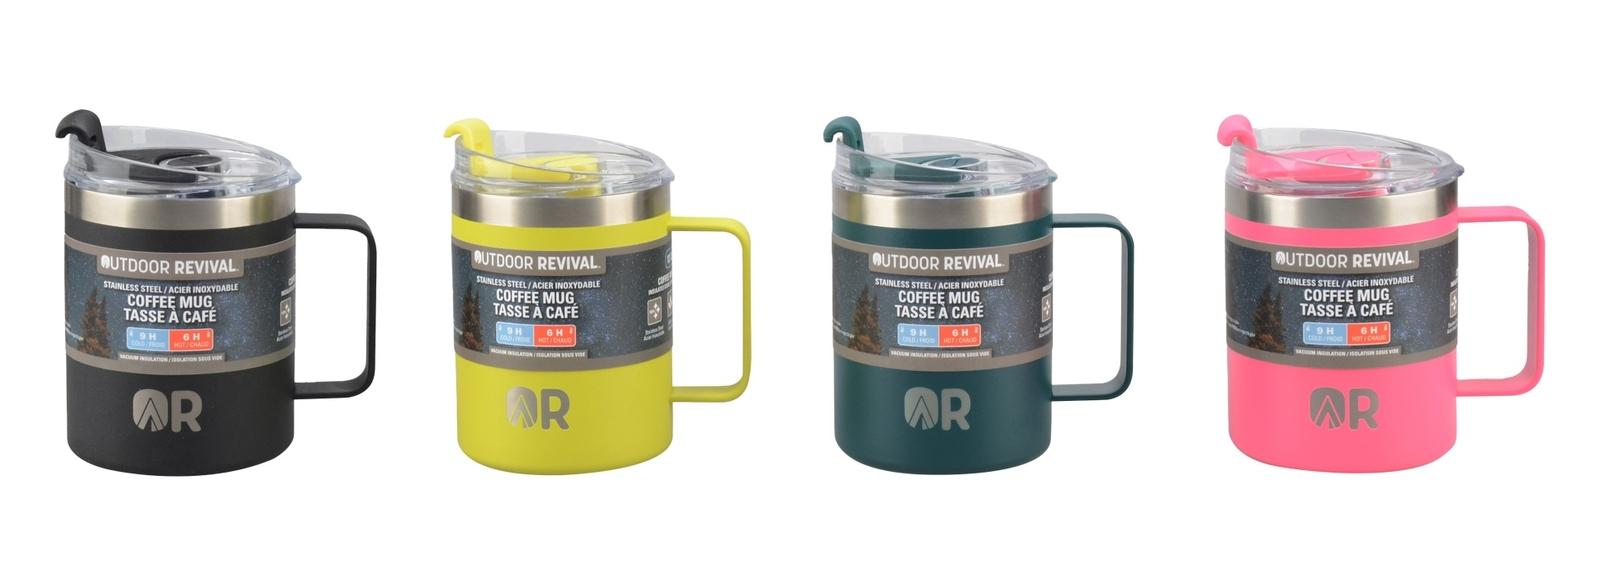 Outdoor Revival 12 OZ Coffee Mug all 4 color options